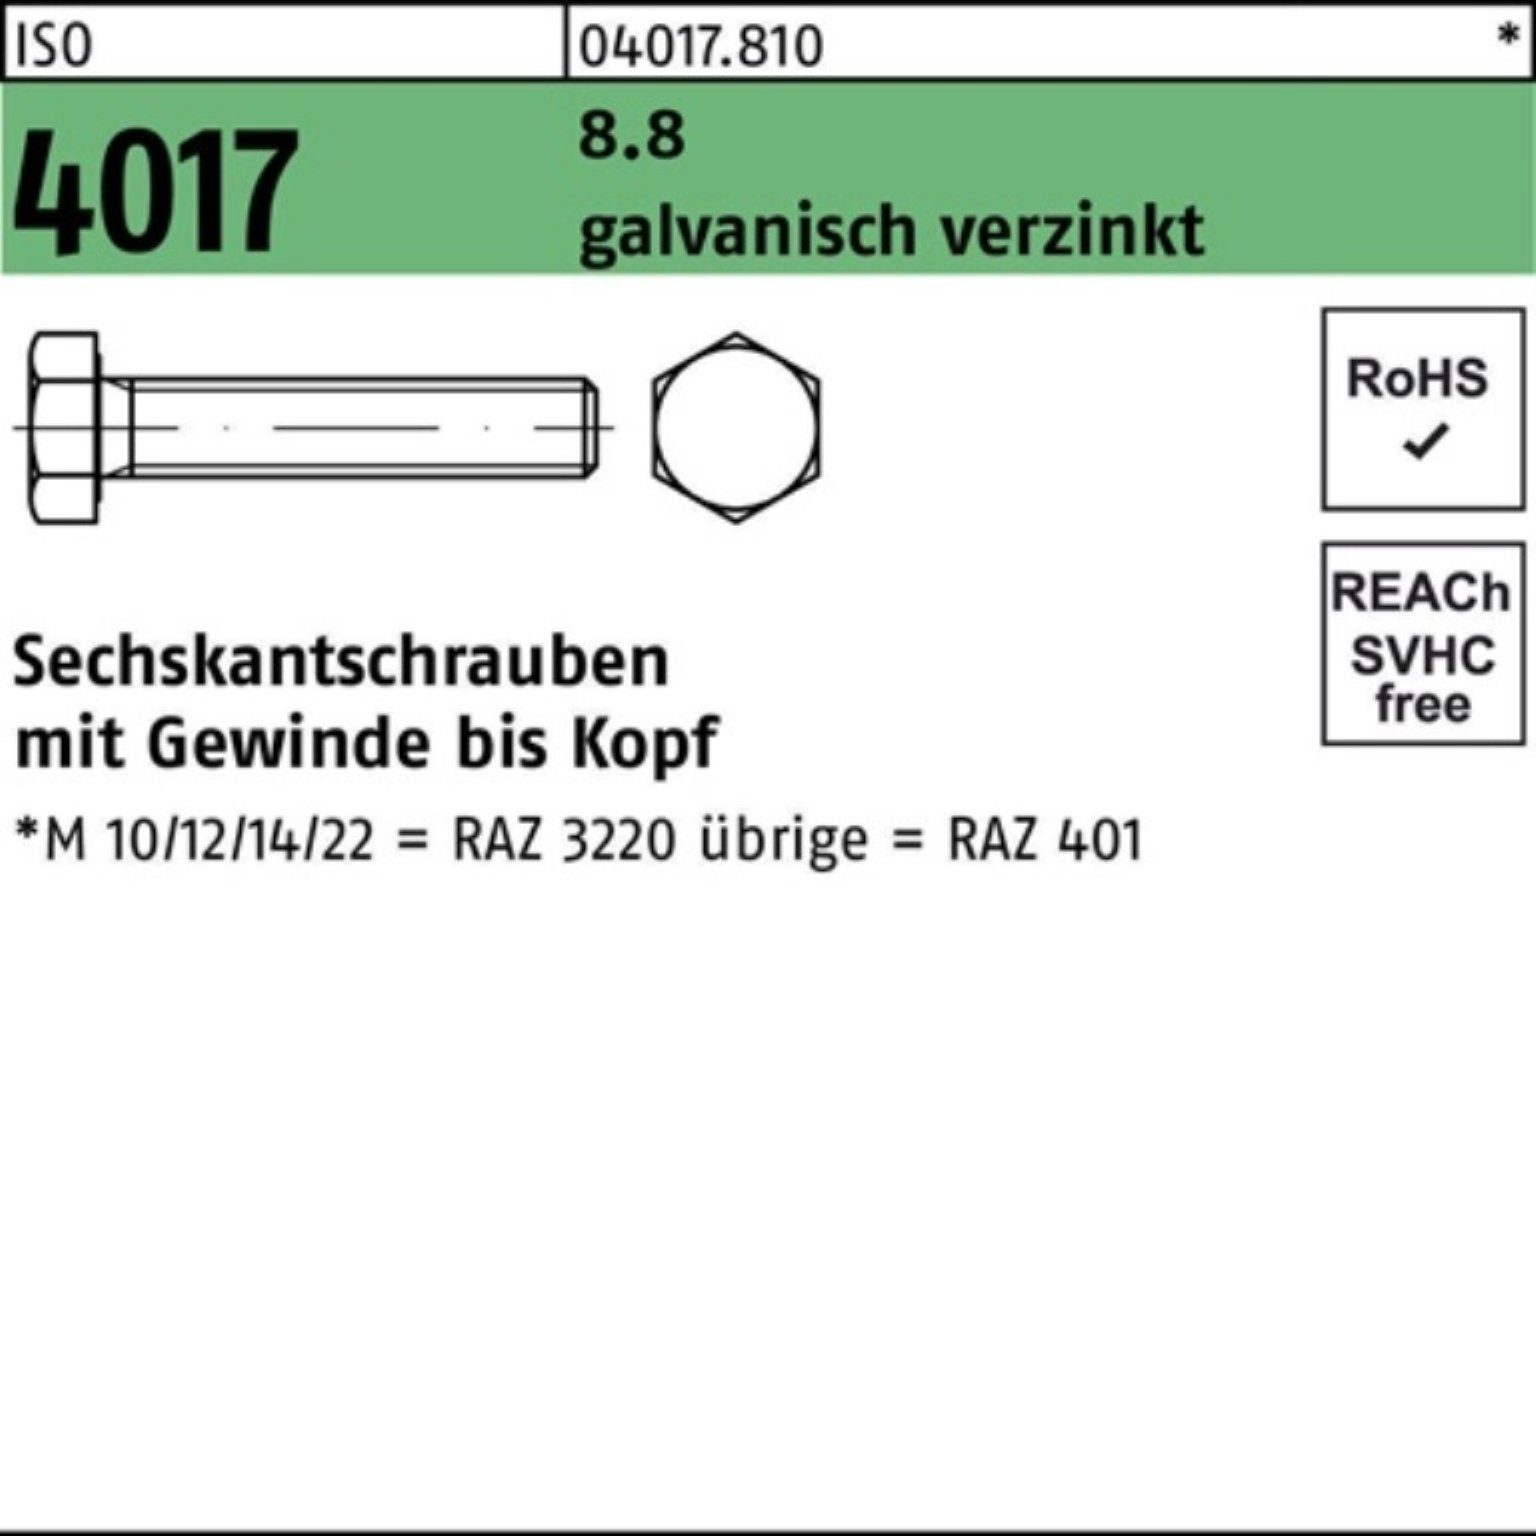 Bufab Sechskantschraube 100er Pack Sechskantschraube galv.verz. St ISO VG 50 8.8 4017 M14x 100